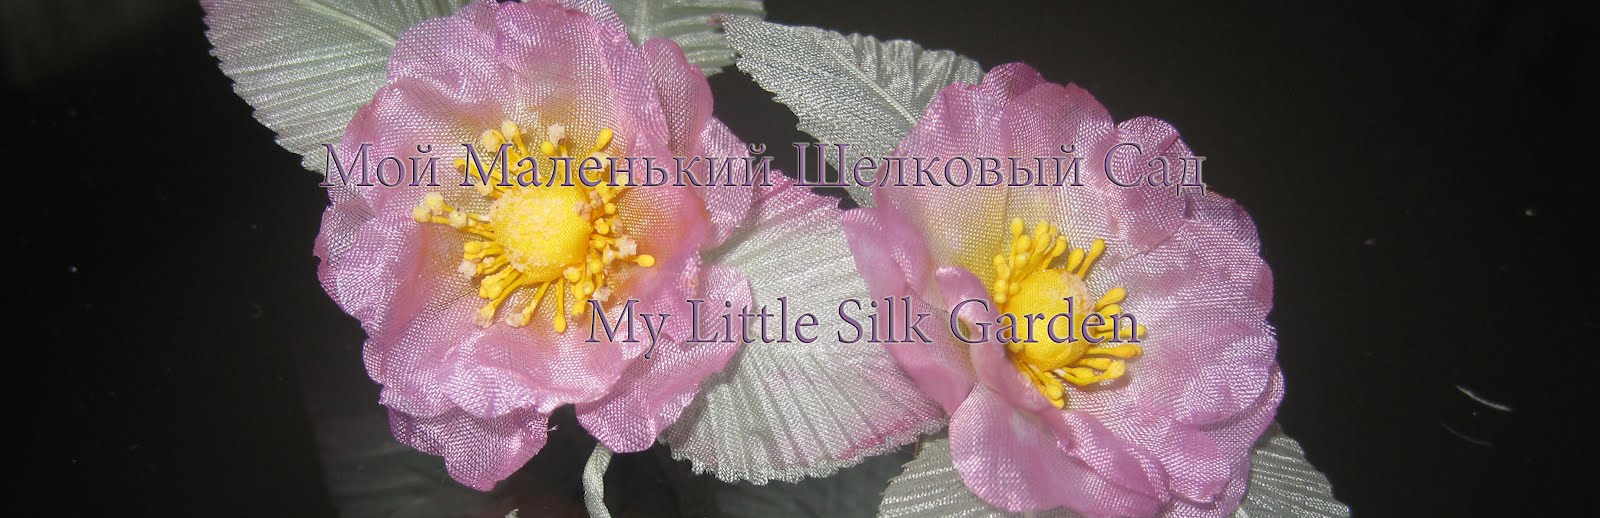 Мой Маленький  Шелковый Cад / My Little Silk Garden